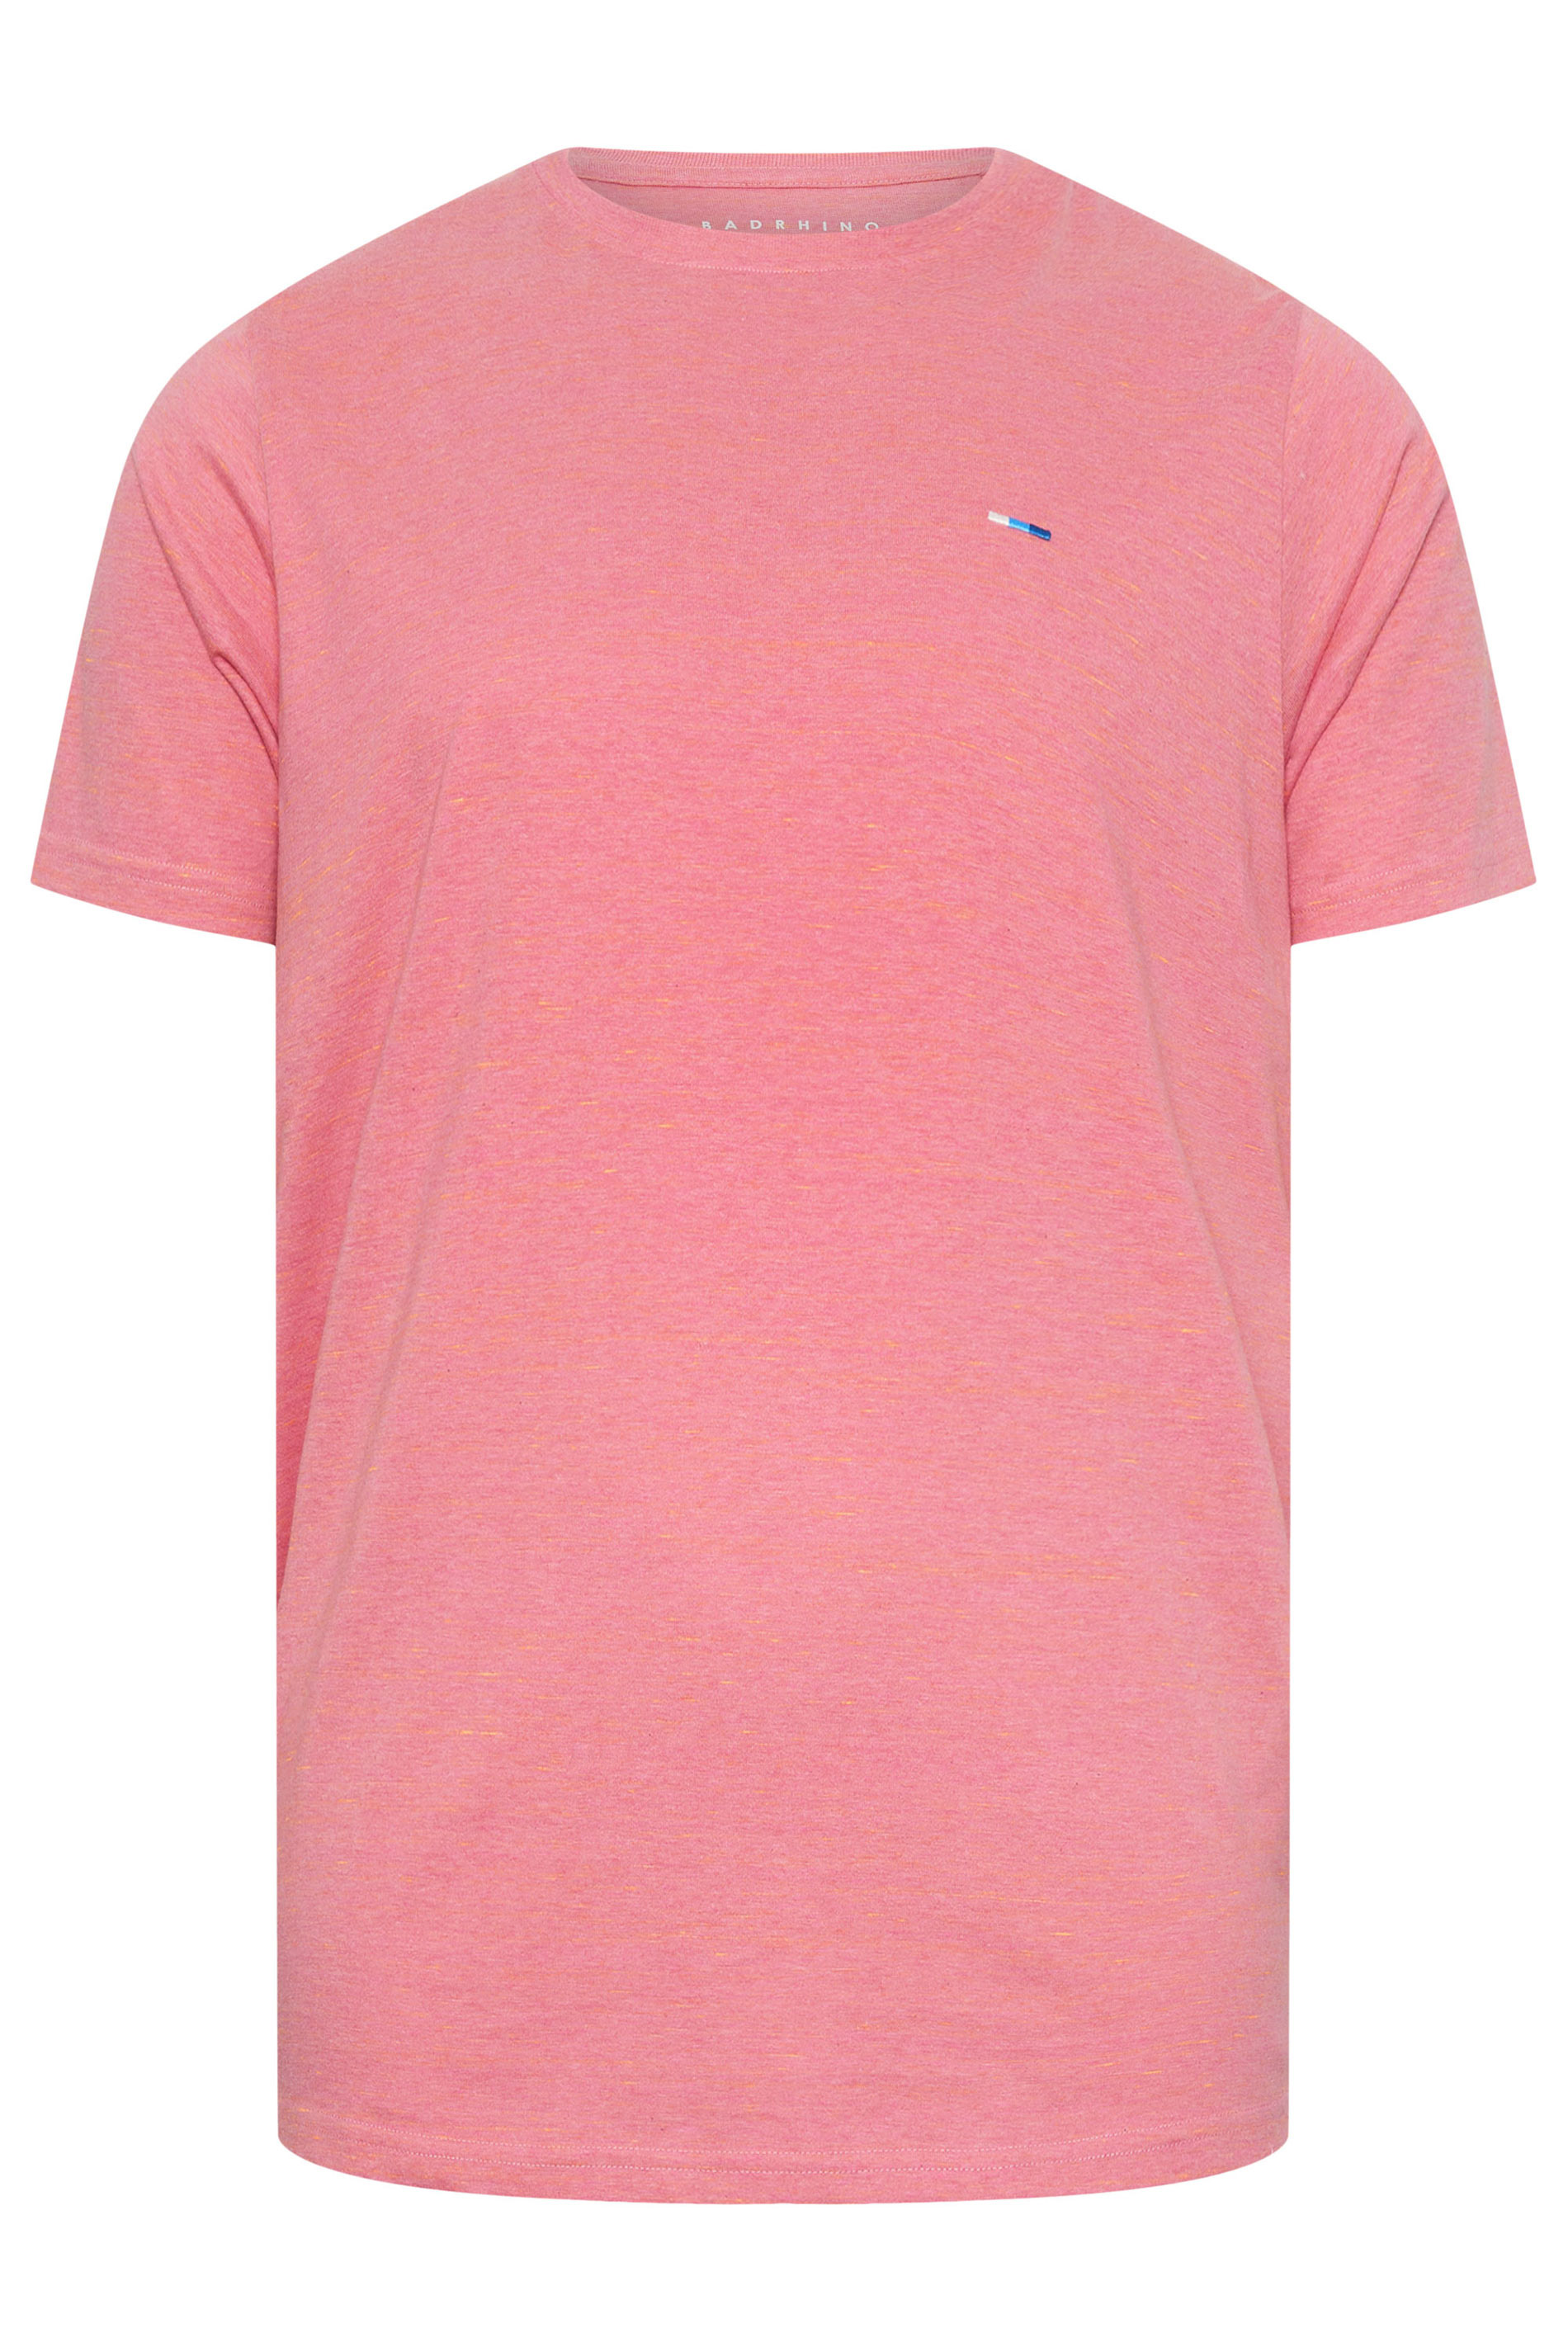 BadRhino Big & Tall Pink Injected Slub Jersey T-Shirt | BadRhino 2